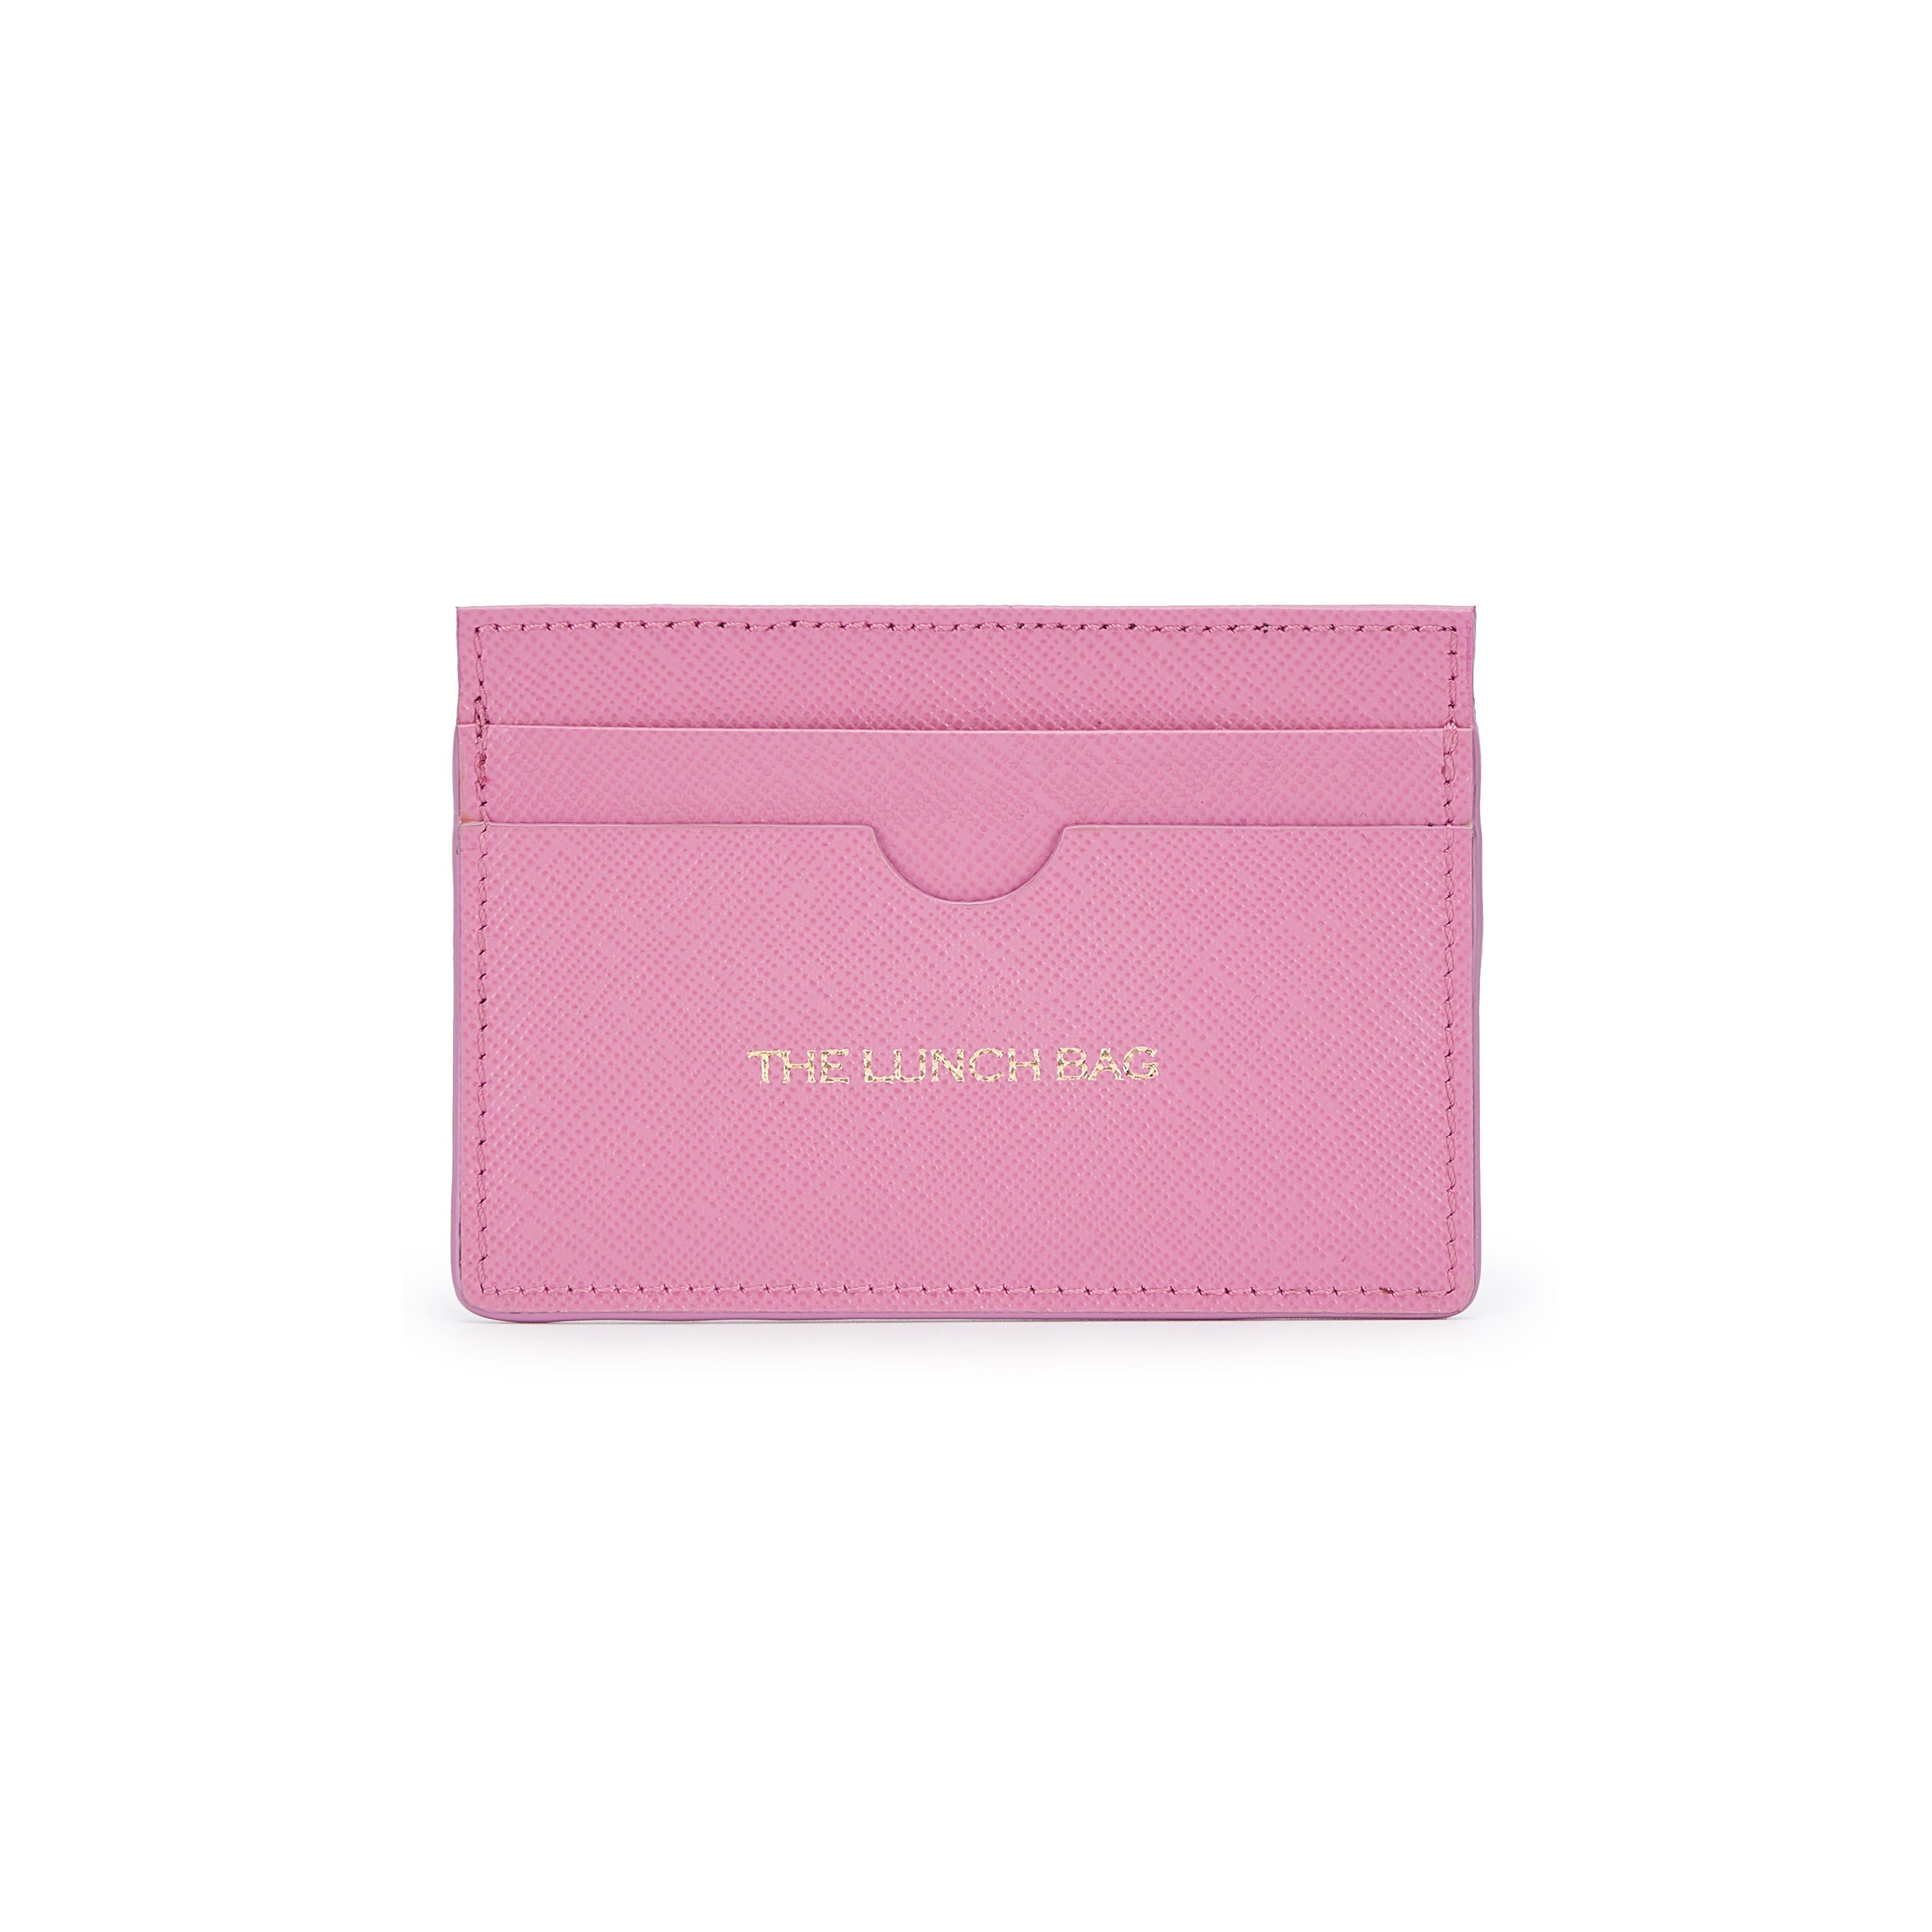 Light pink unisex wallet